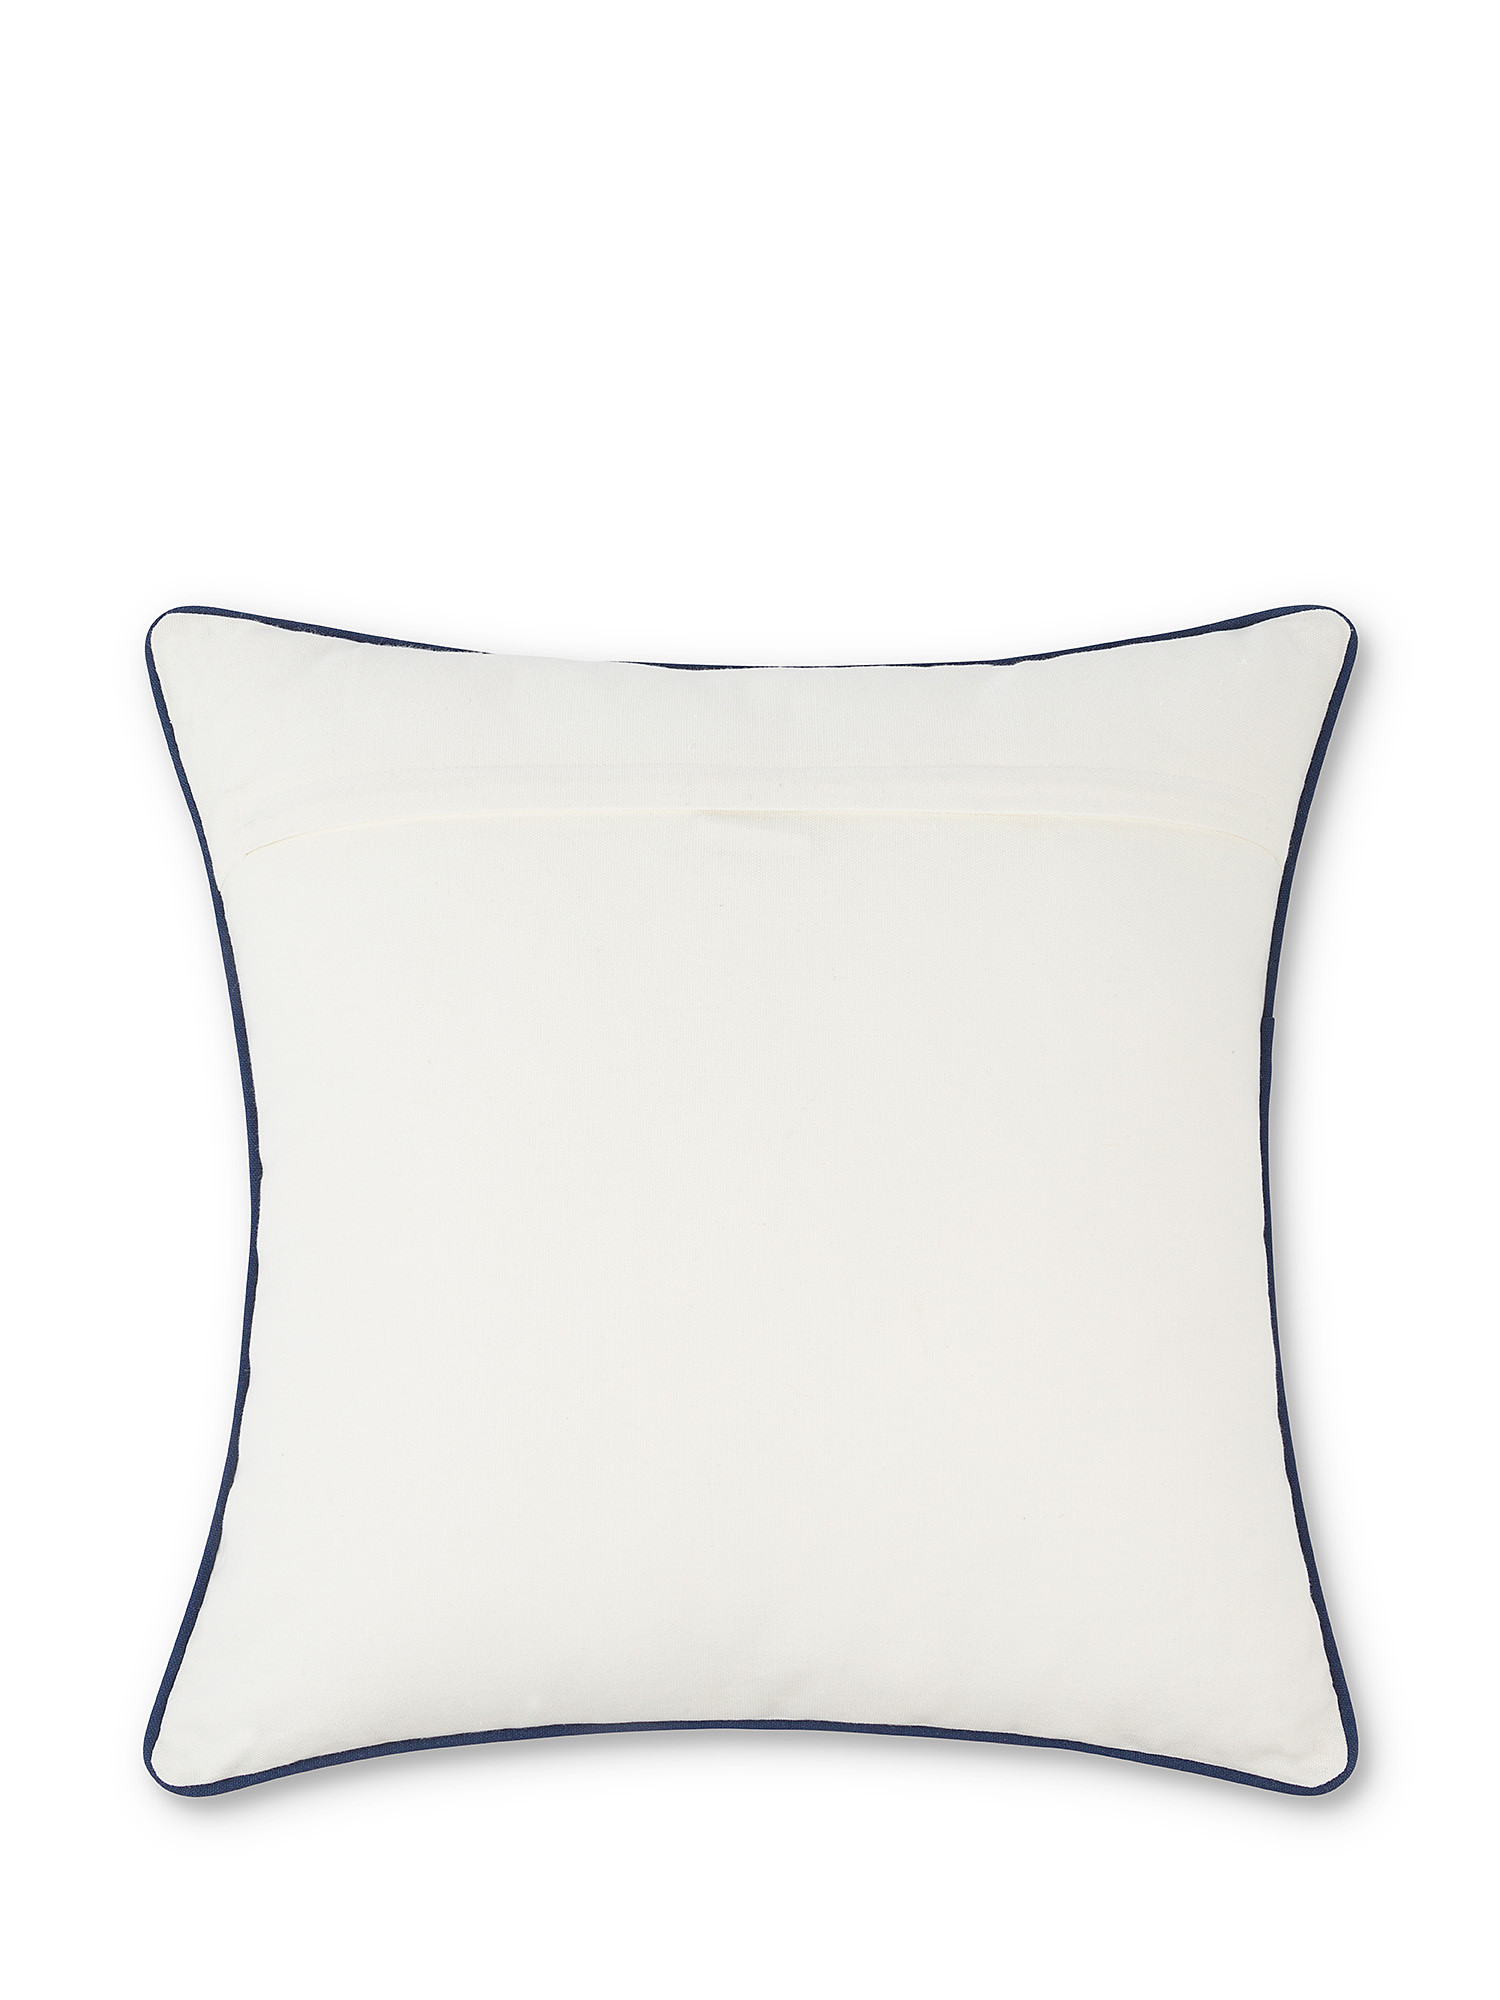 Marine embroidery cotton cushion 35x50cm, Light Blue, large image number 1